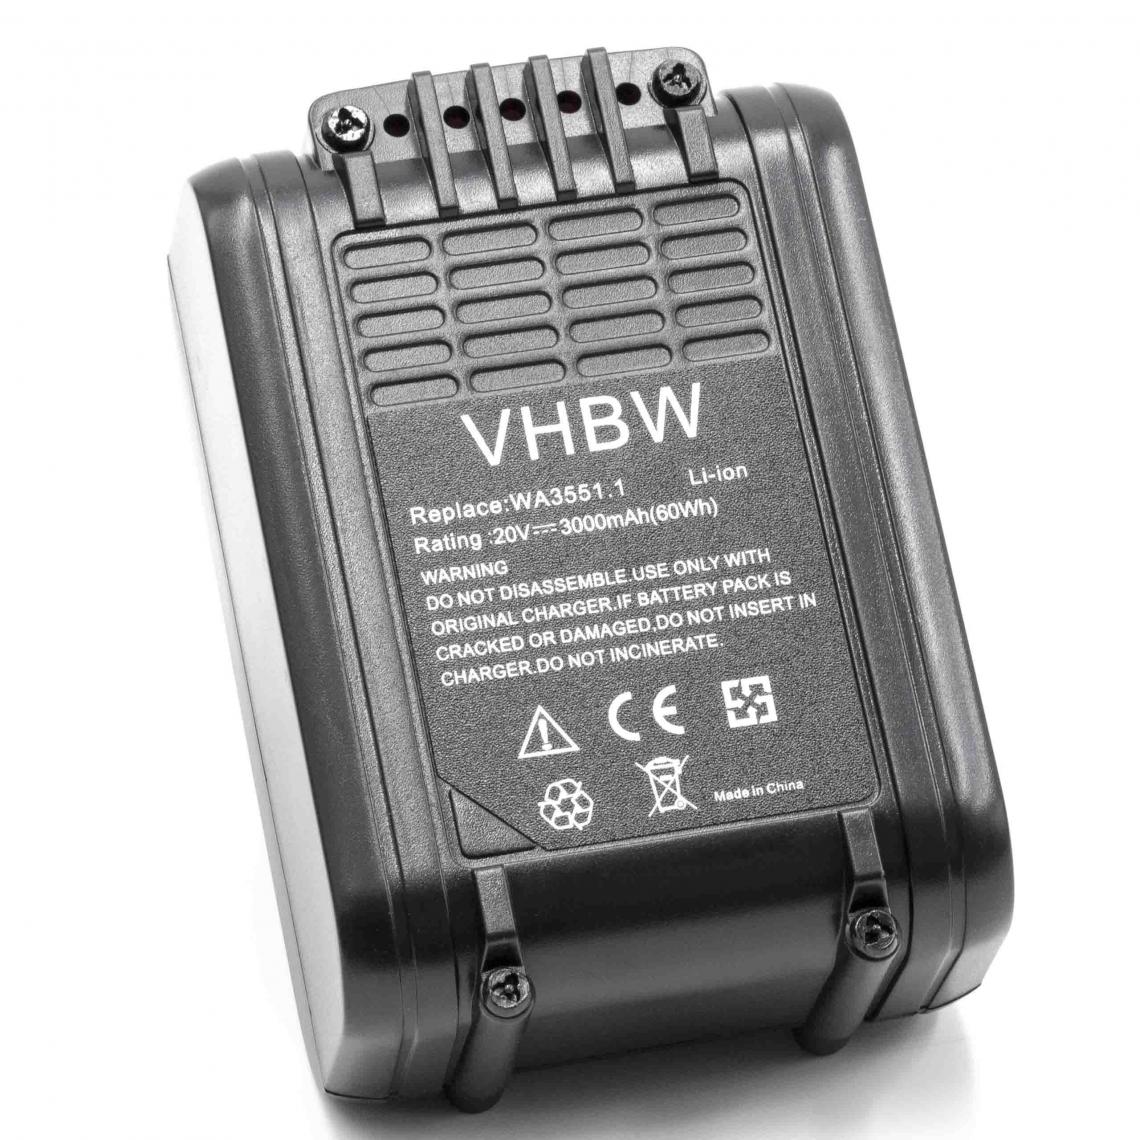 Vhbw - vhbw Batterie compatible avec Worx WG625E.3, WG629.2, WG629E, WG629E.1, WG629E.8, WG629E.9 outil électrique (3000mAh Li-ion 20 V) - Clouterie